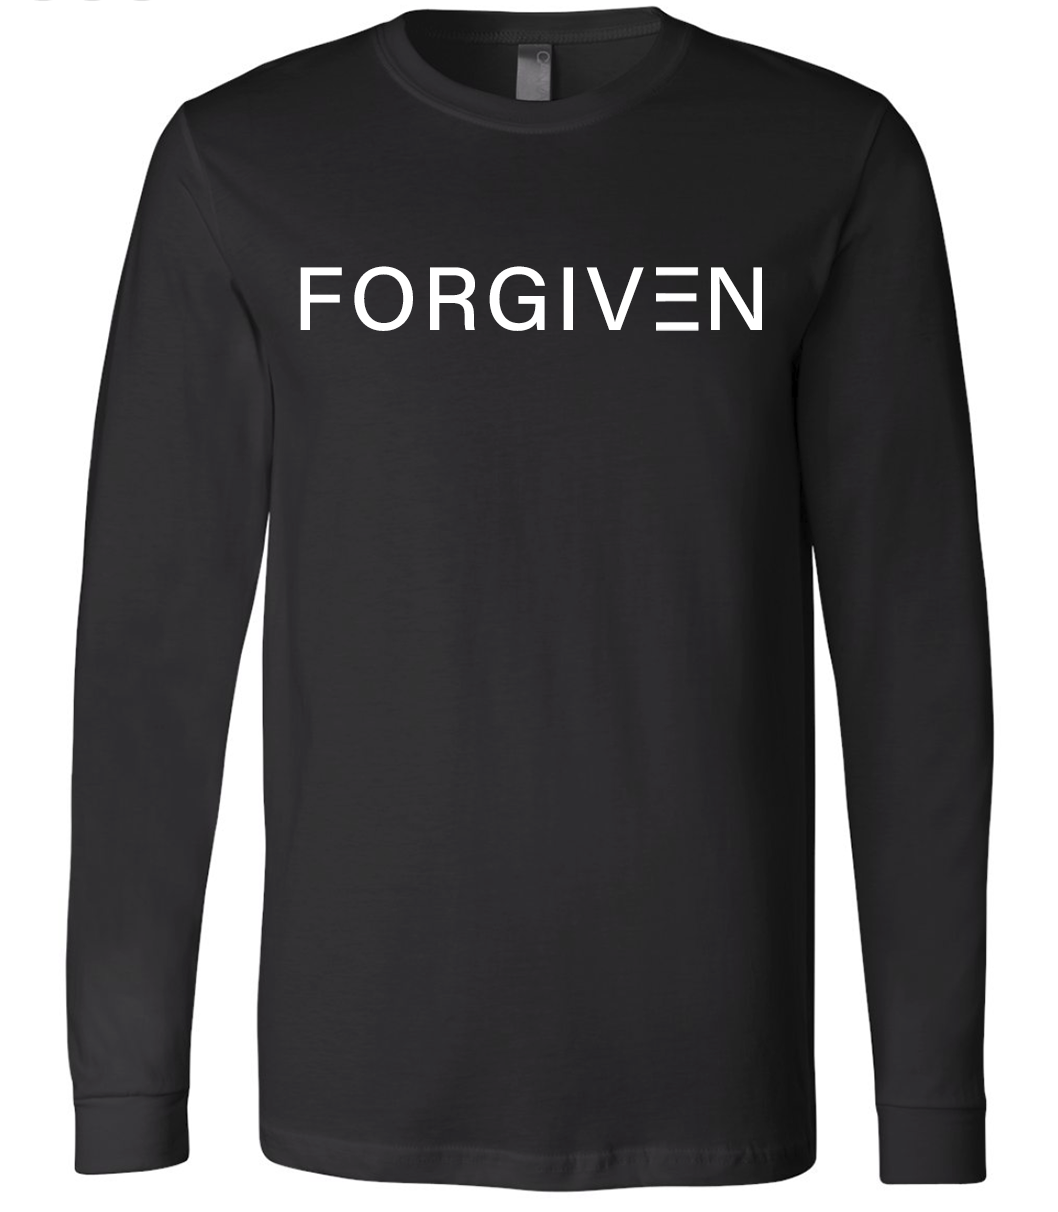 Christian Long sleeve black shirt that says Forgiven